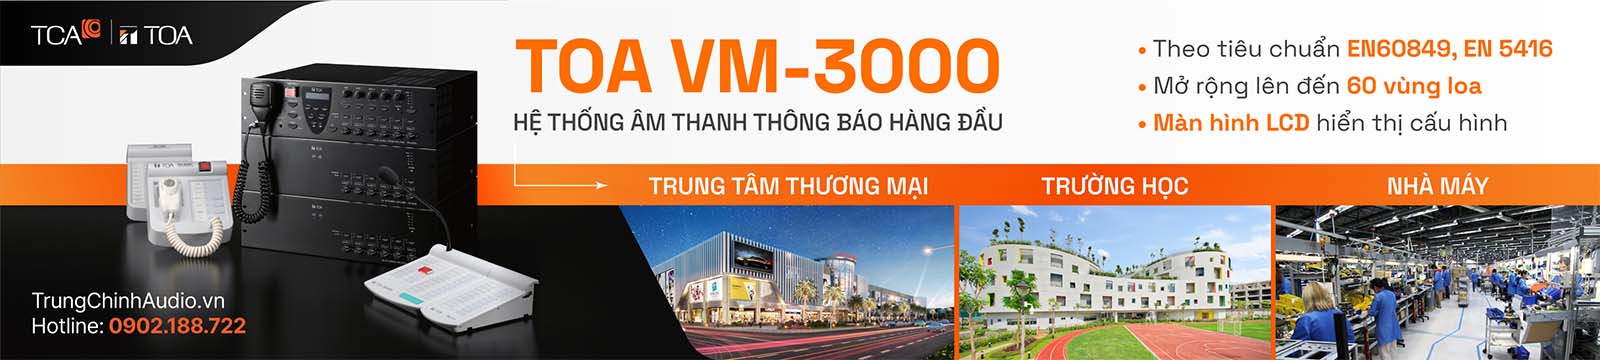 he-thong-am-thanh-thong-bao-toa-vm-3000